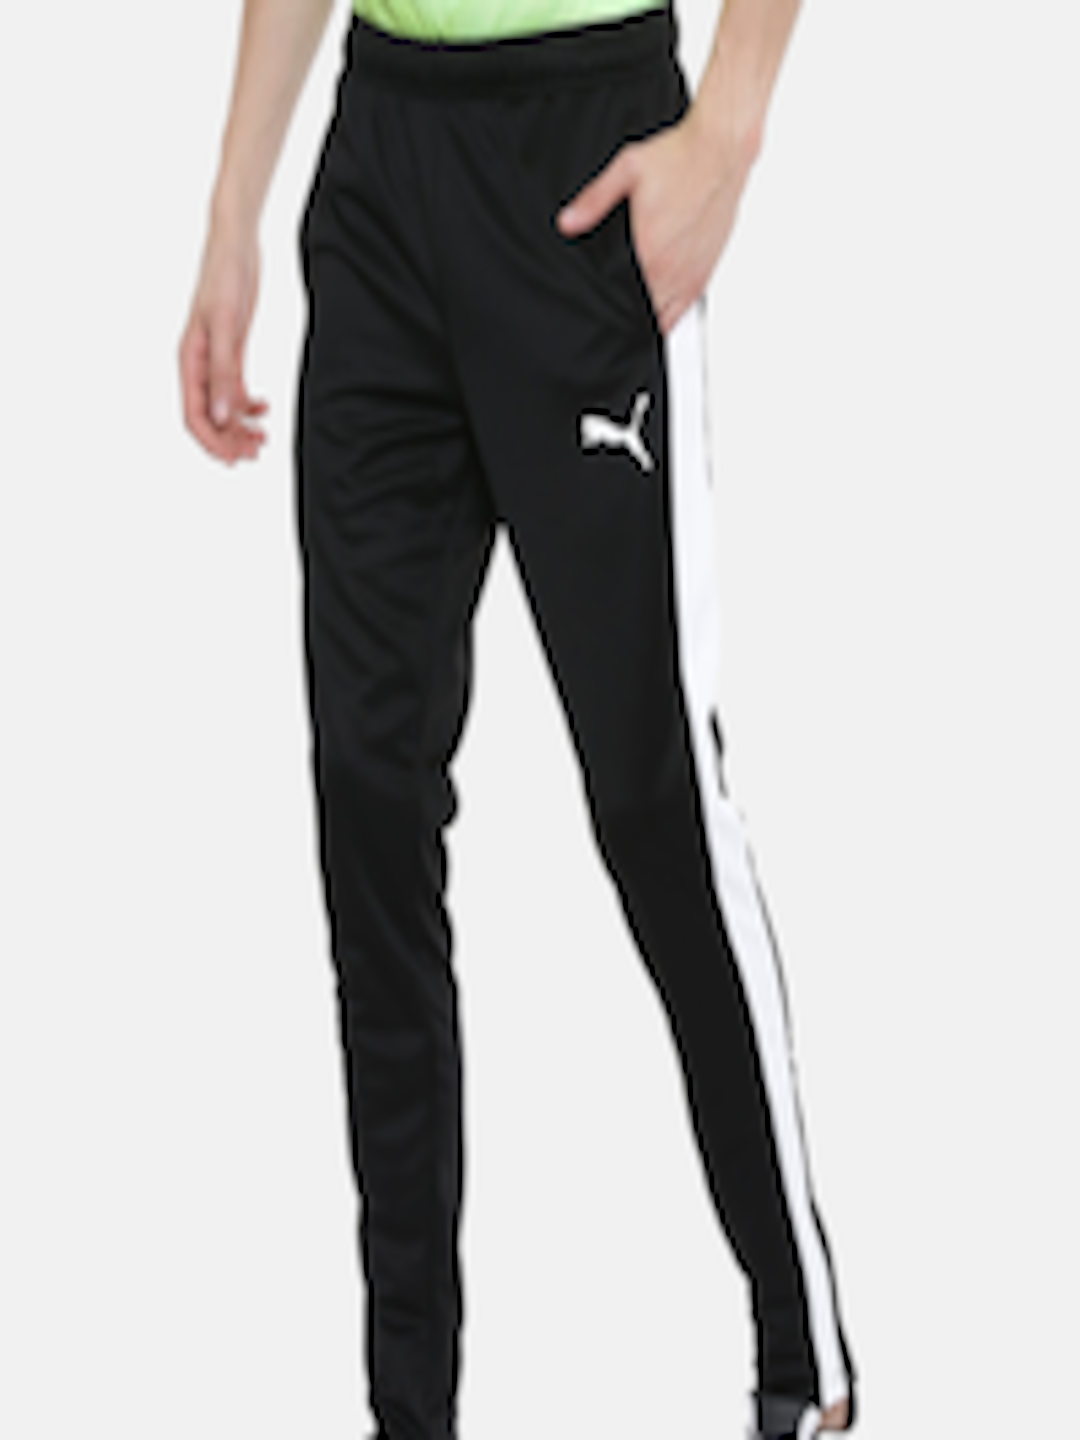 Buy Puma Men Black & White Striped Active Tricot Slim Fit Track Pants ...